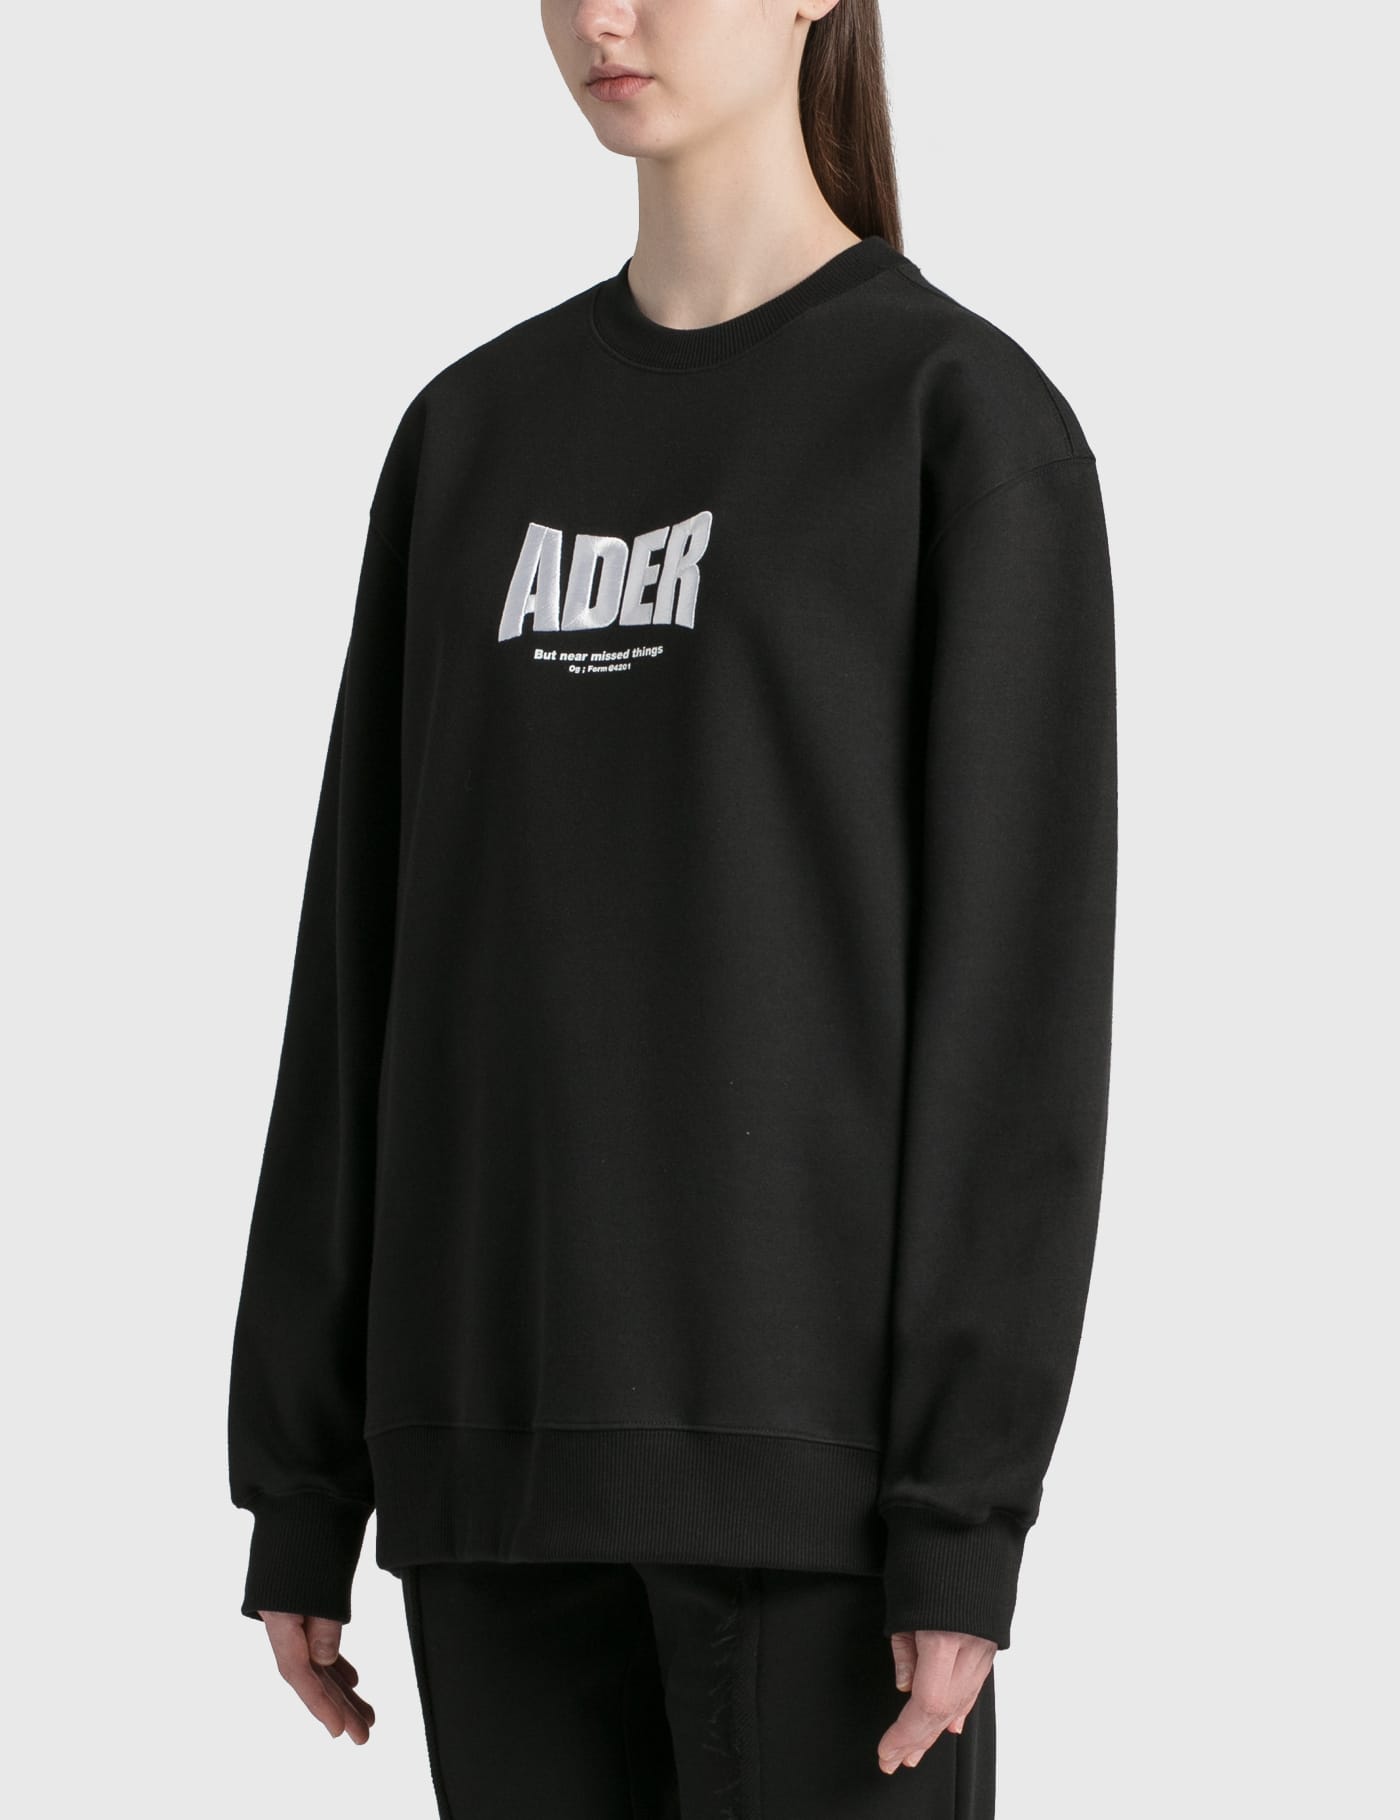 Ader Error   Ader Logo Sweatshirt   HBX   Globally Curated Fashion